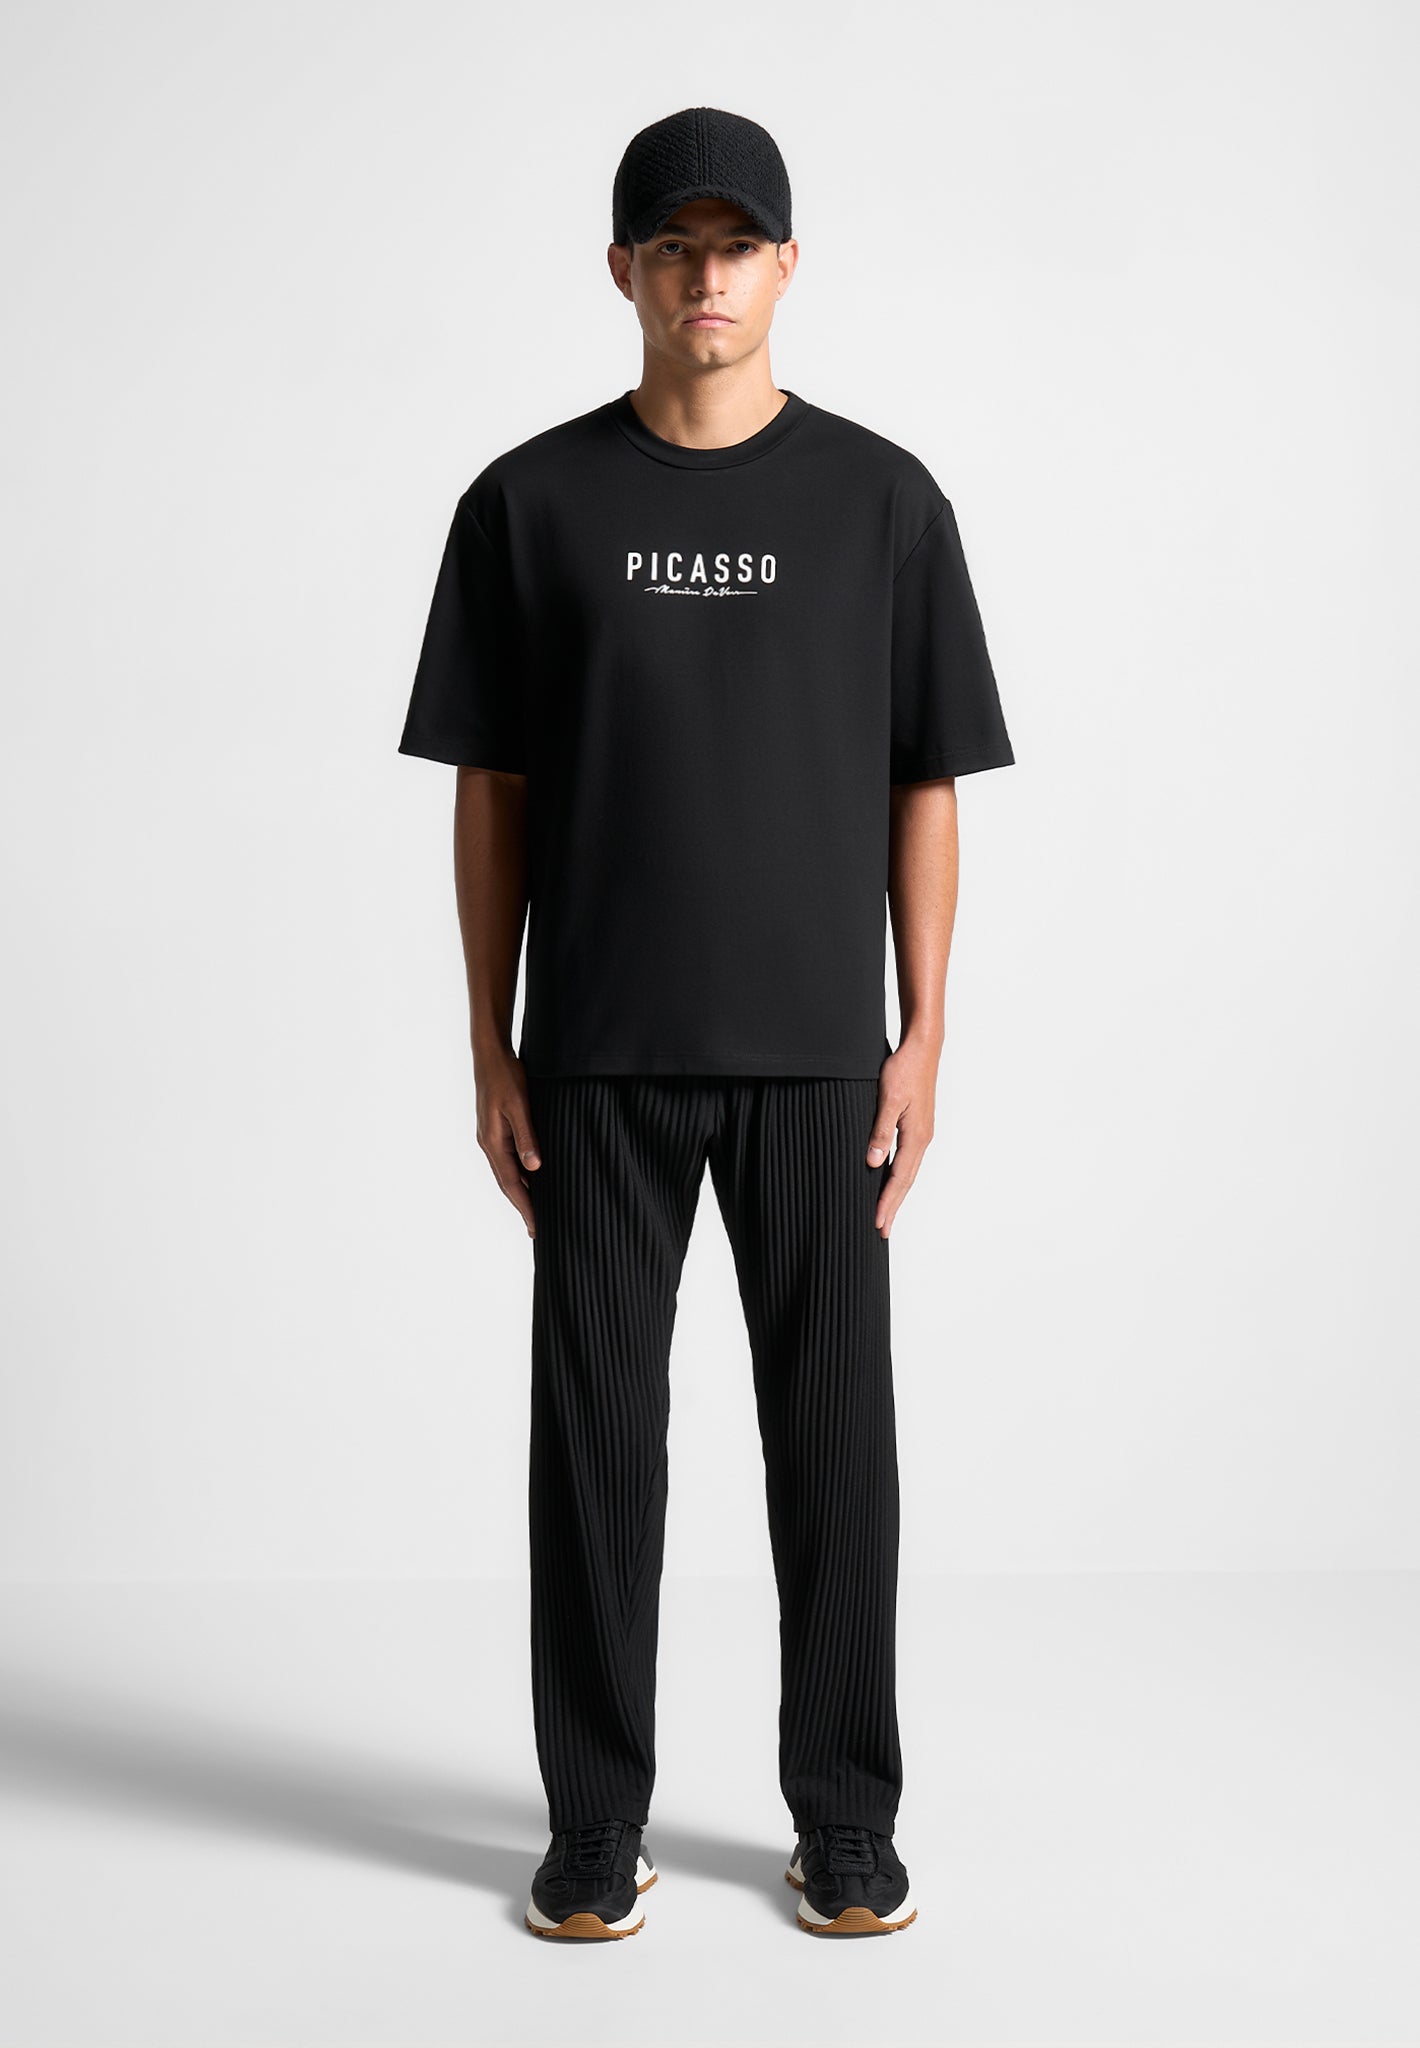 picasso-t-shirt-black